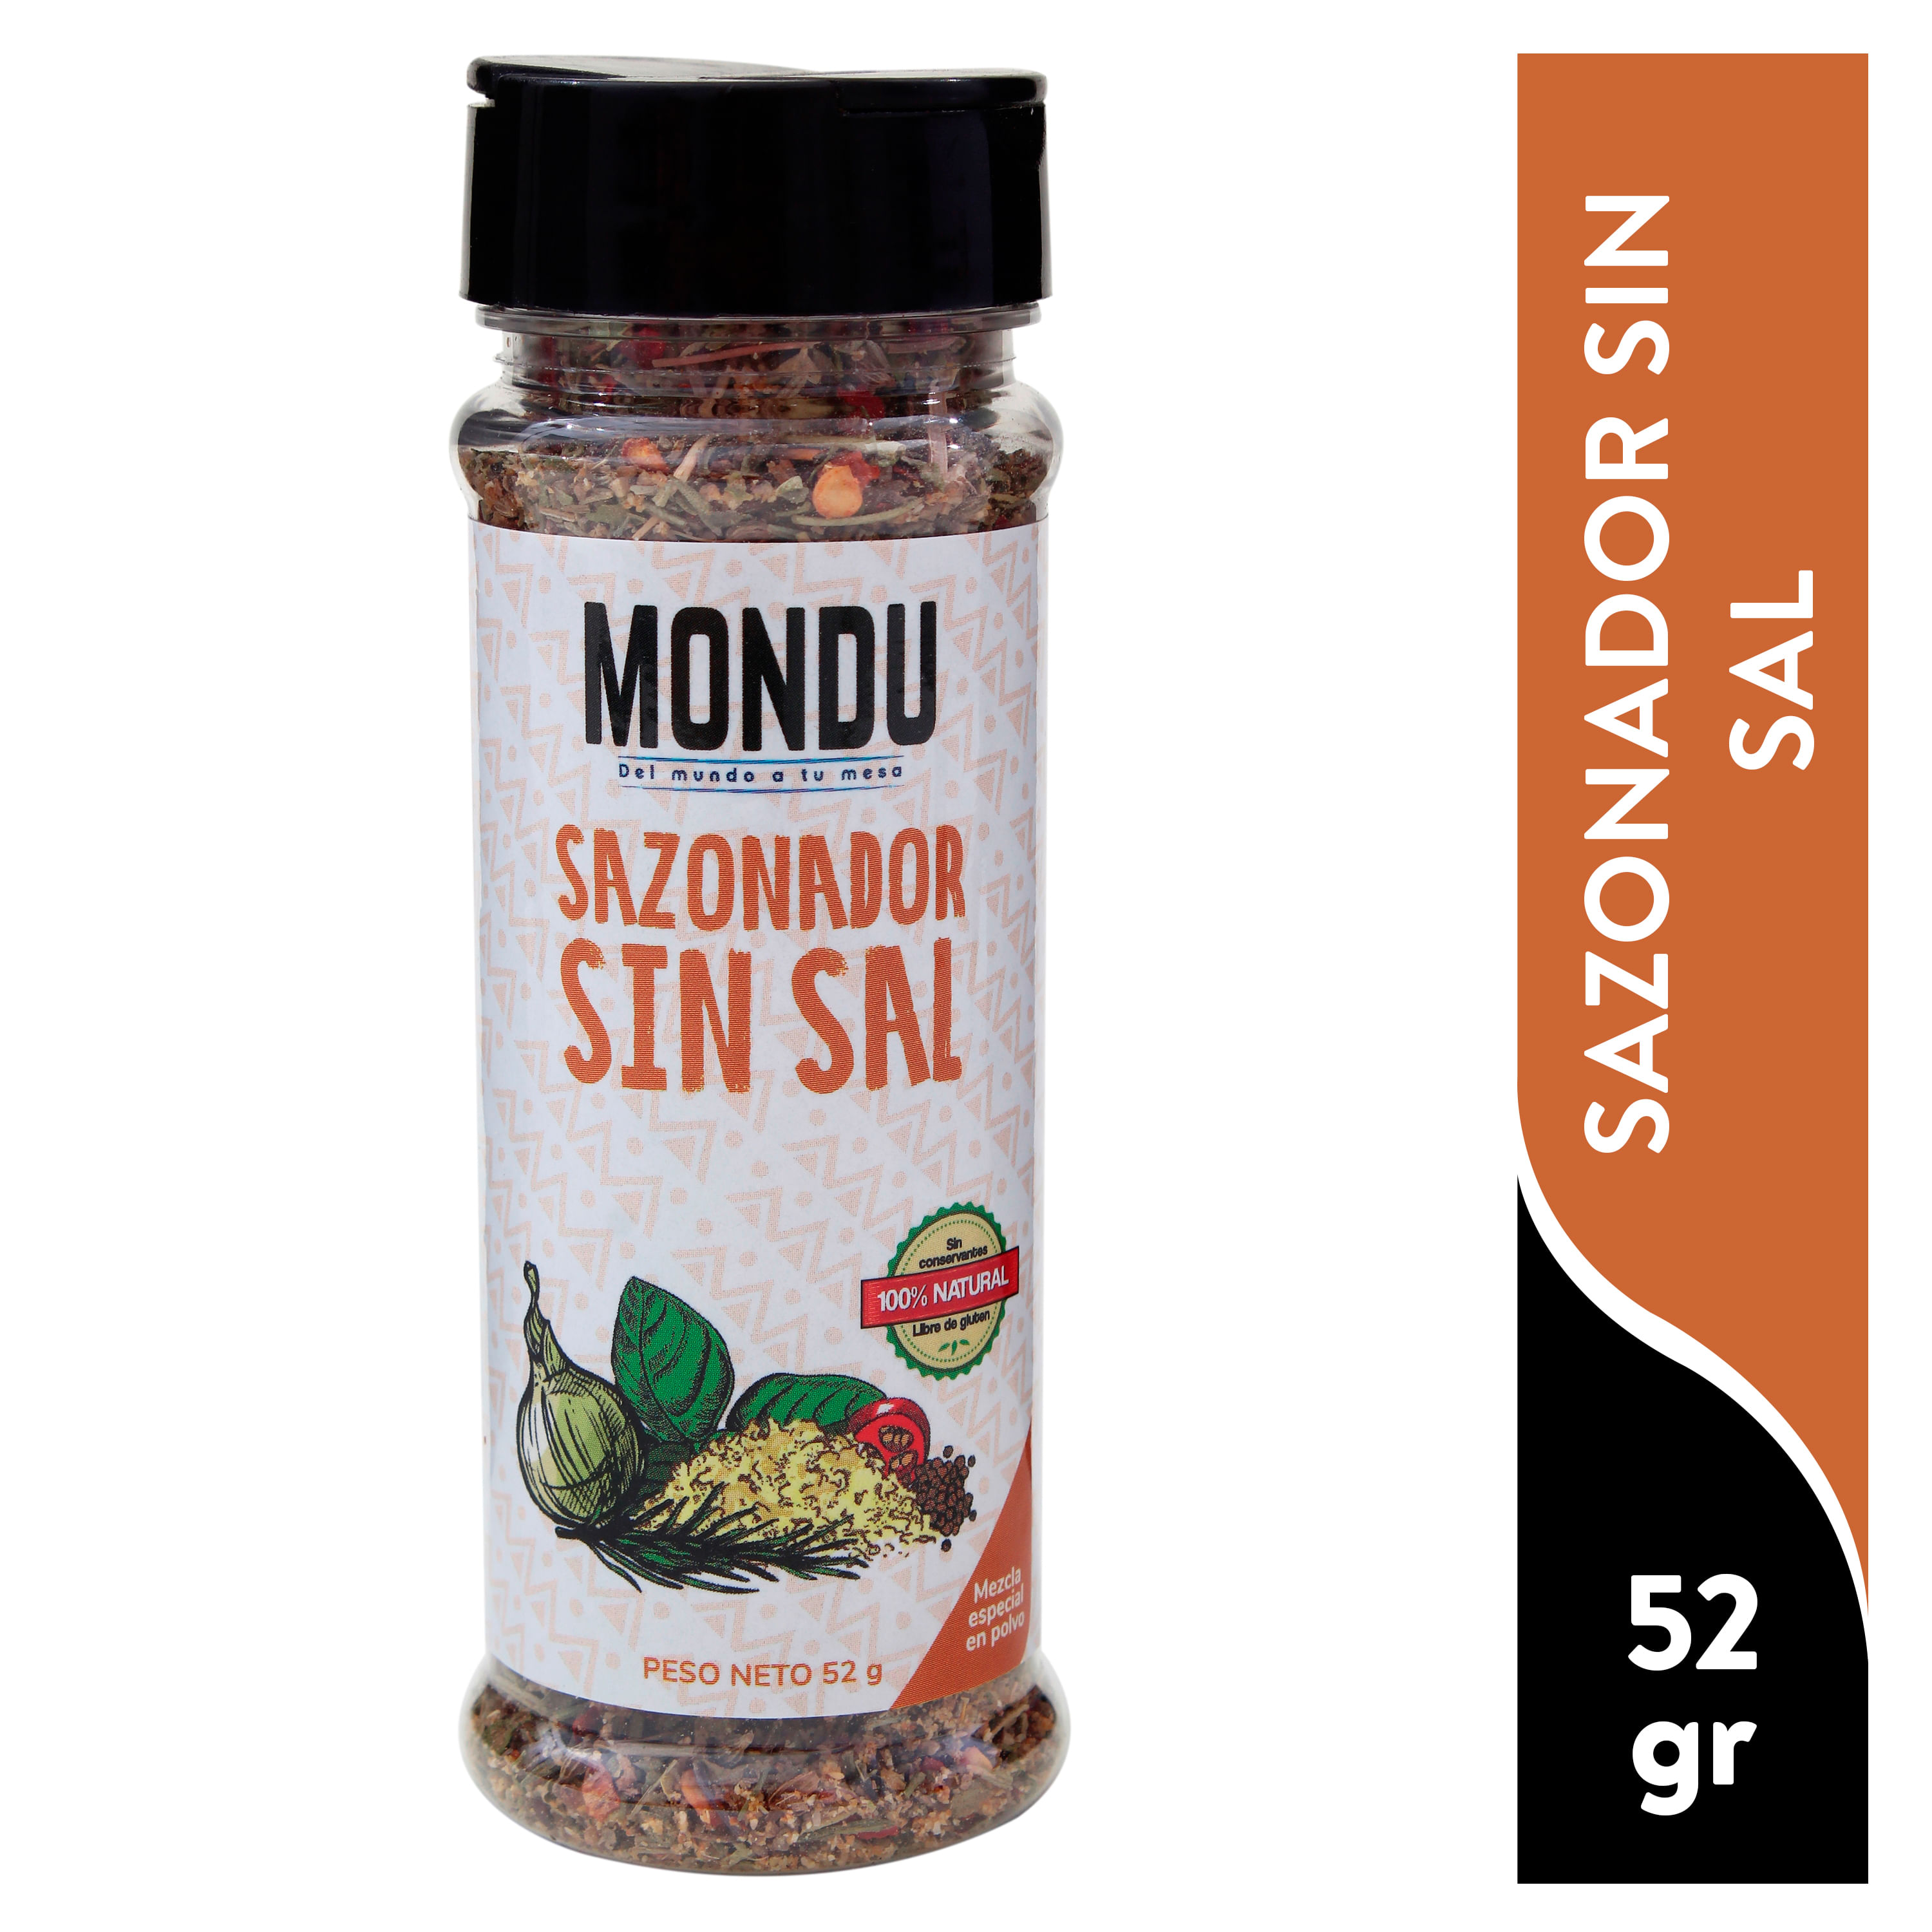 Sazonador-Se-orial-Spice-Mondu-Sin-Sal-52gr-1-54980